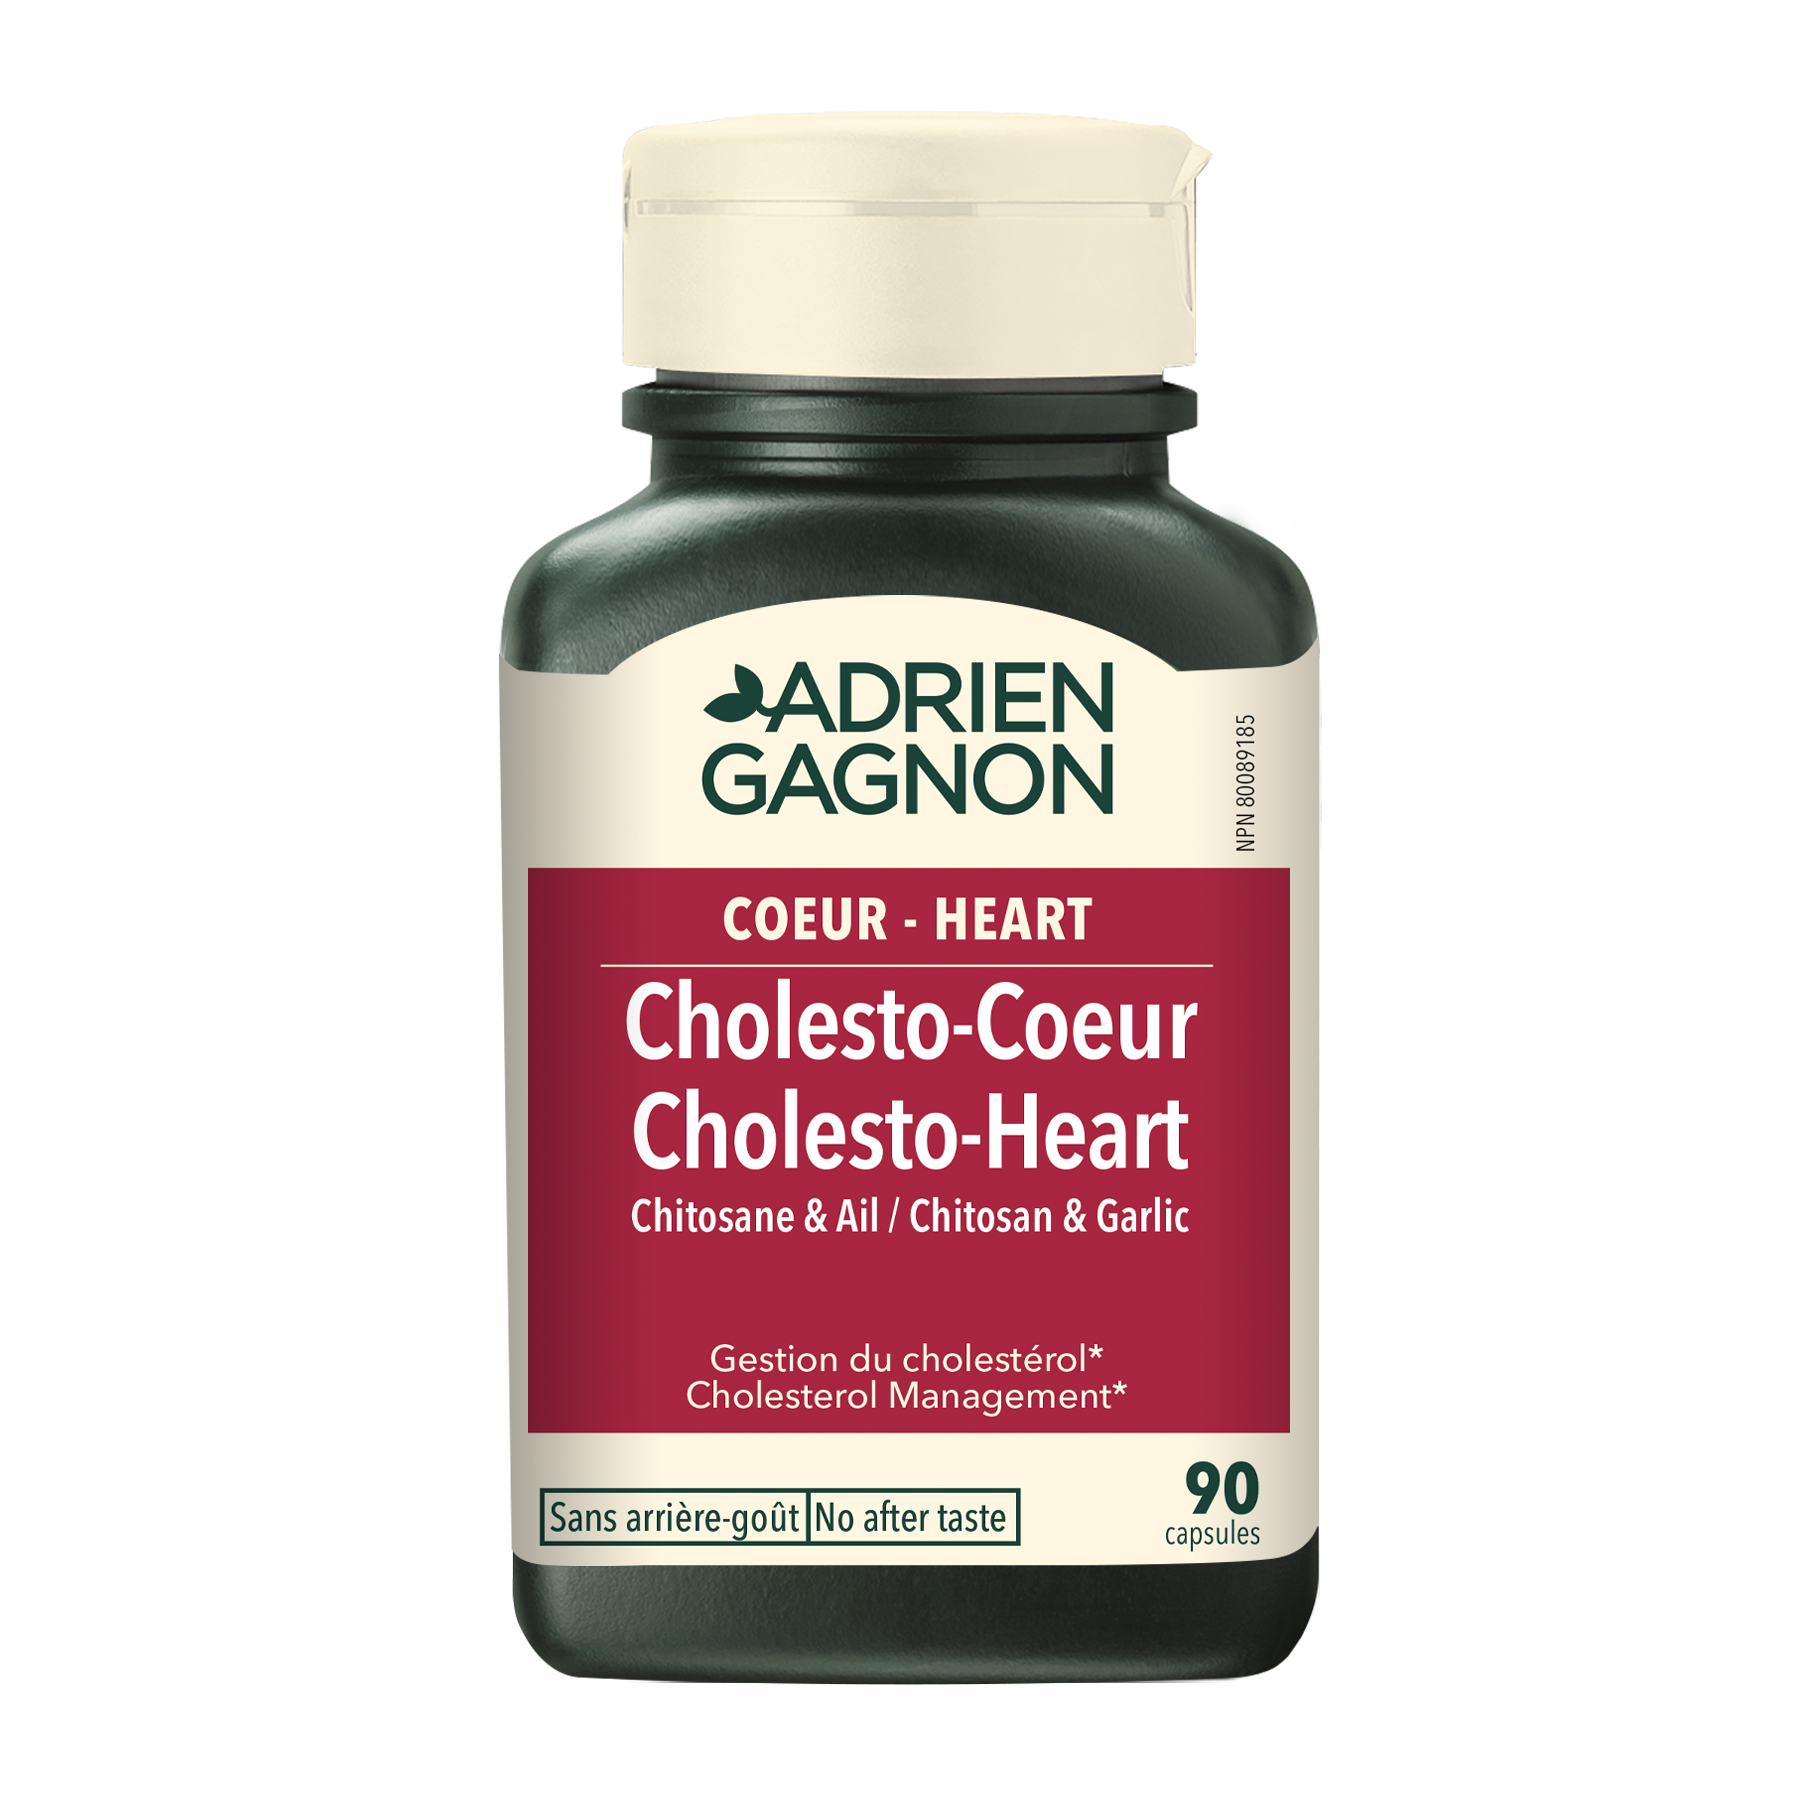 Cholesto Coeur (90 caps) ||Cholesto Heart (90 caps)